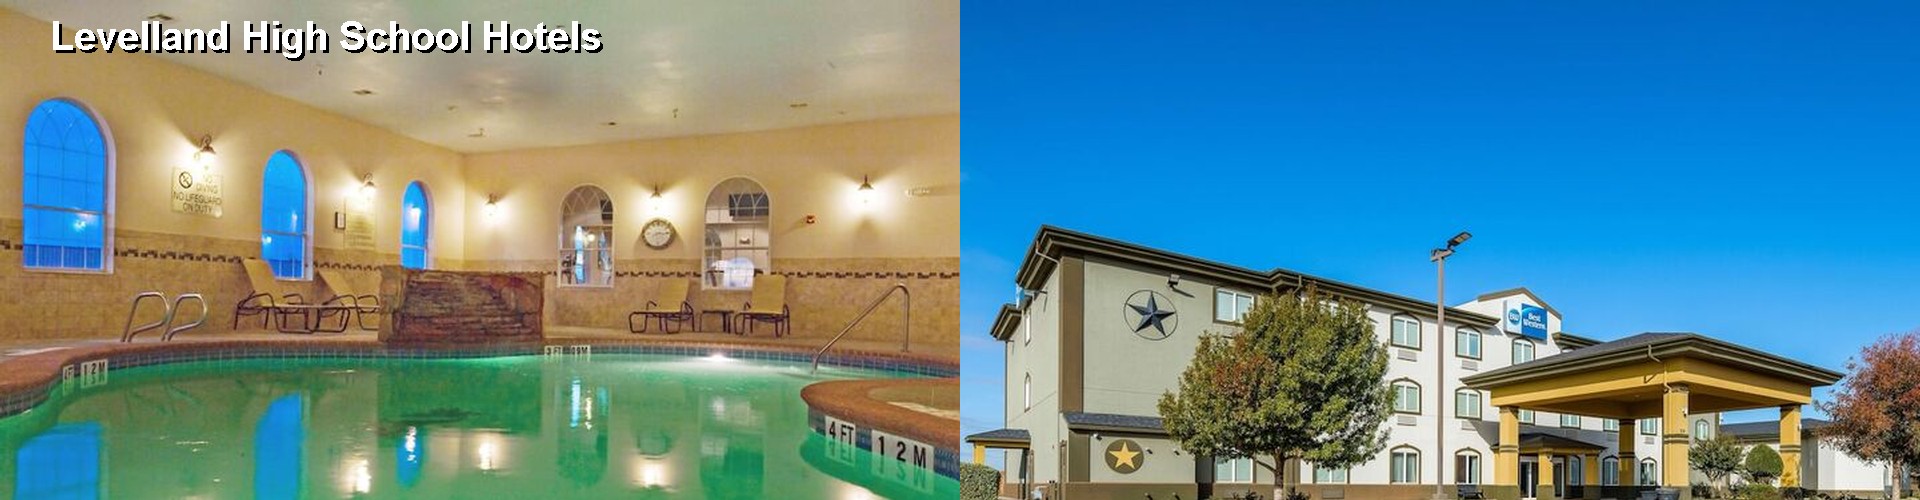 5 Best Hotels near Levelland High School